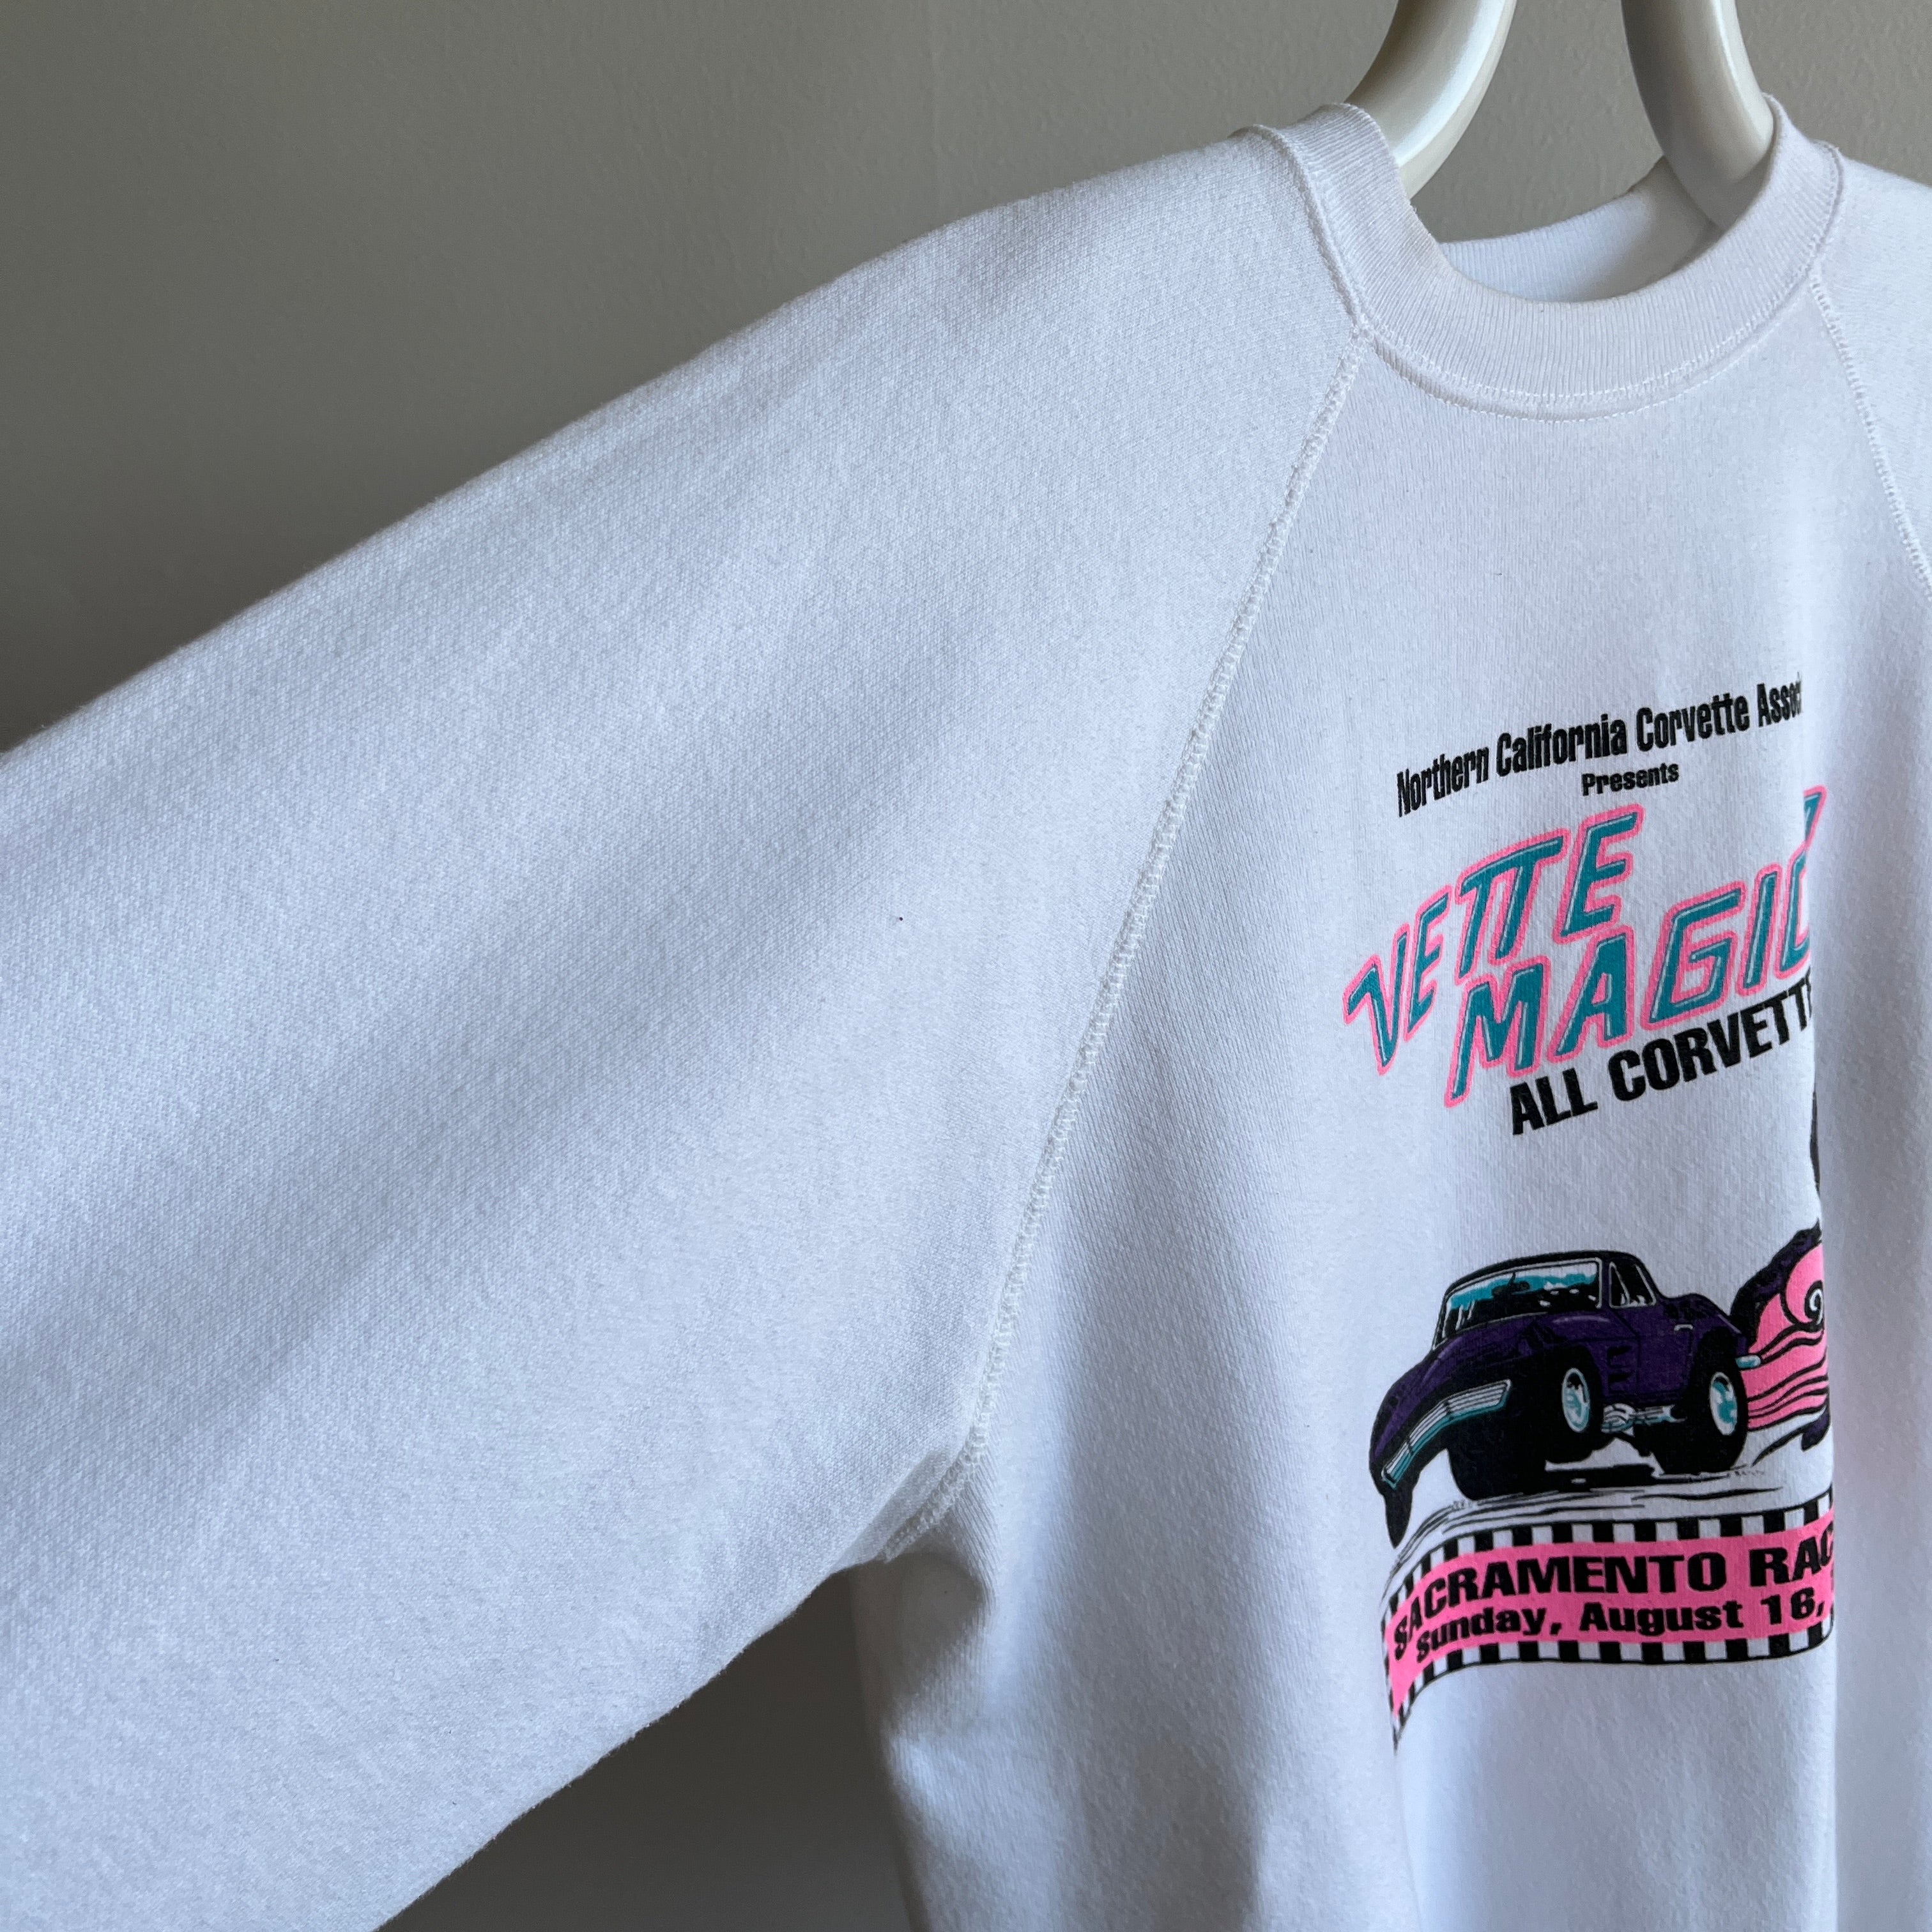 1992 Northern California Vette Magic 17 Sacramento Raceway Sweatshirt